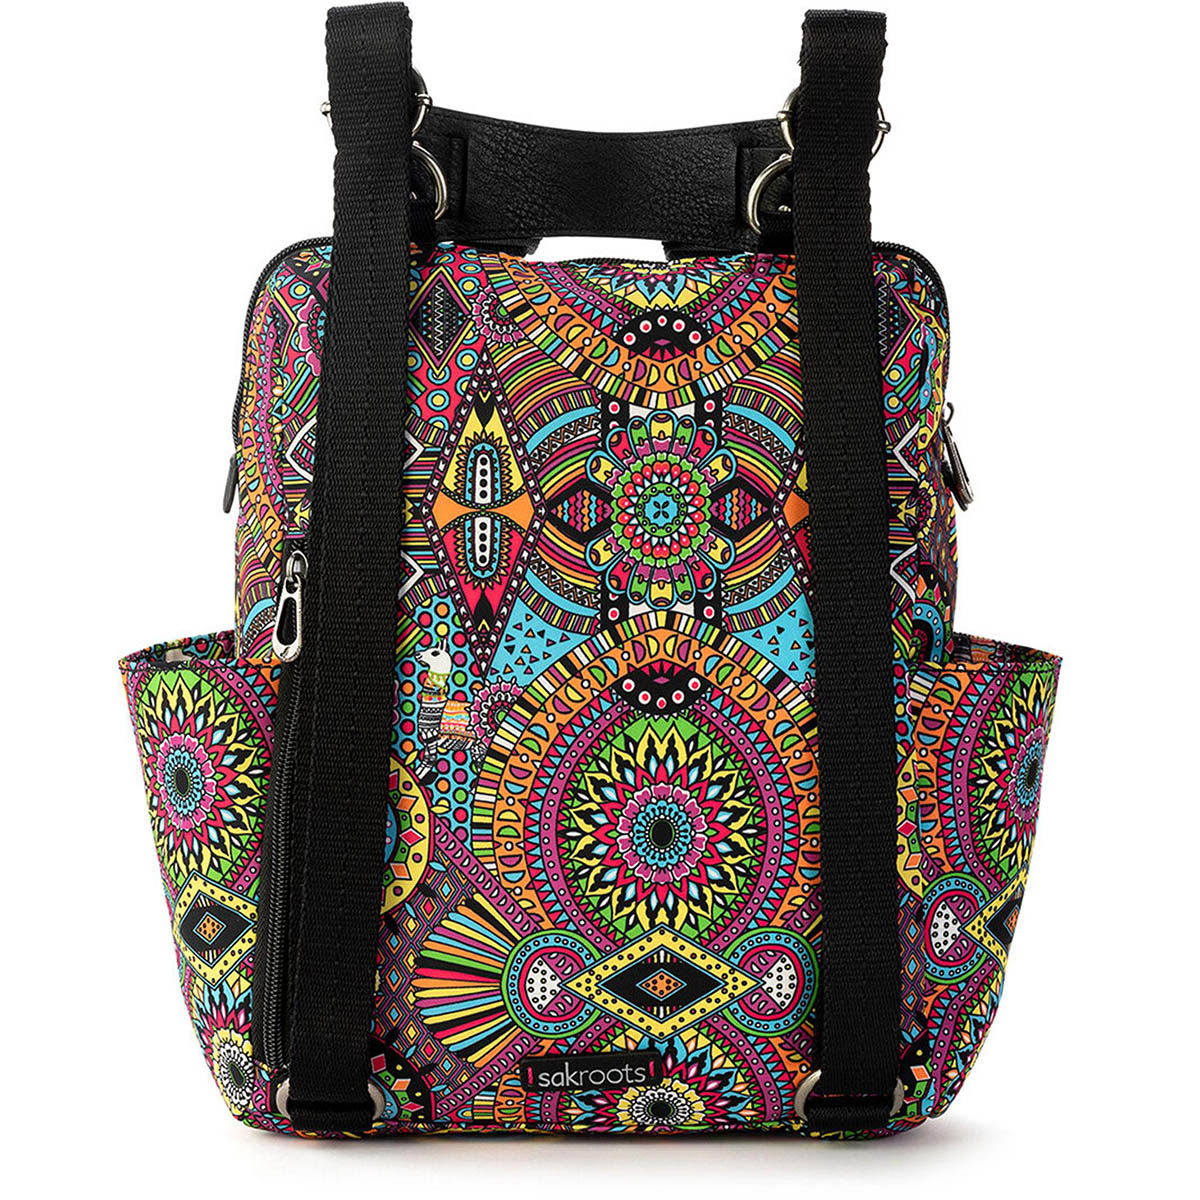 The Sak Loyola Rainbow Wonder Lust Small Backpack